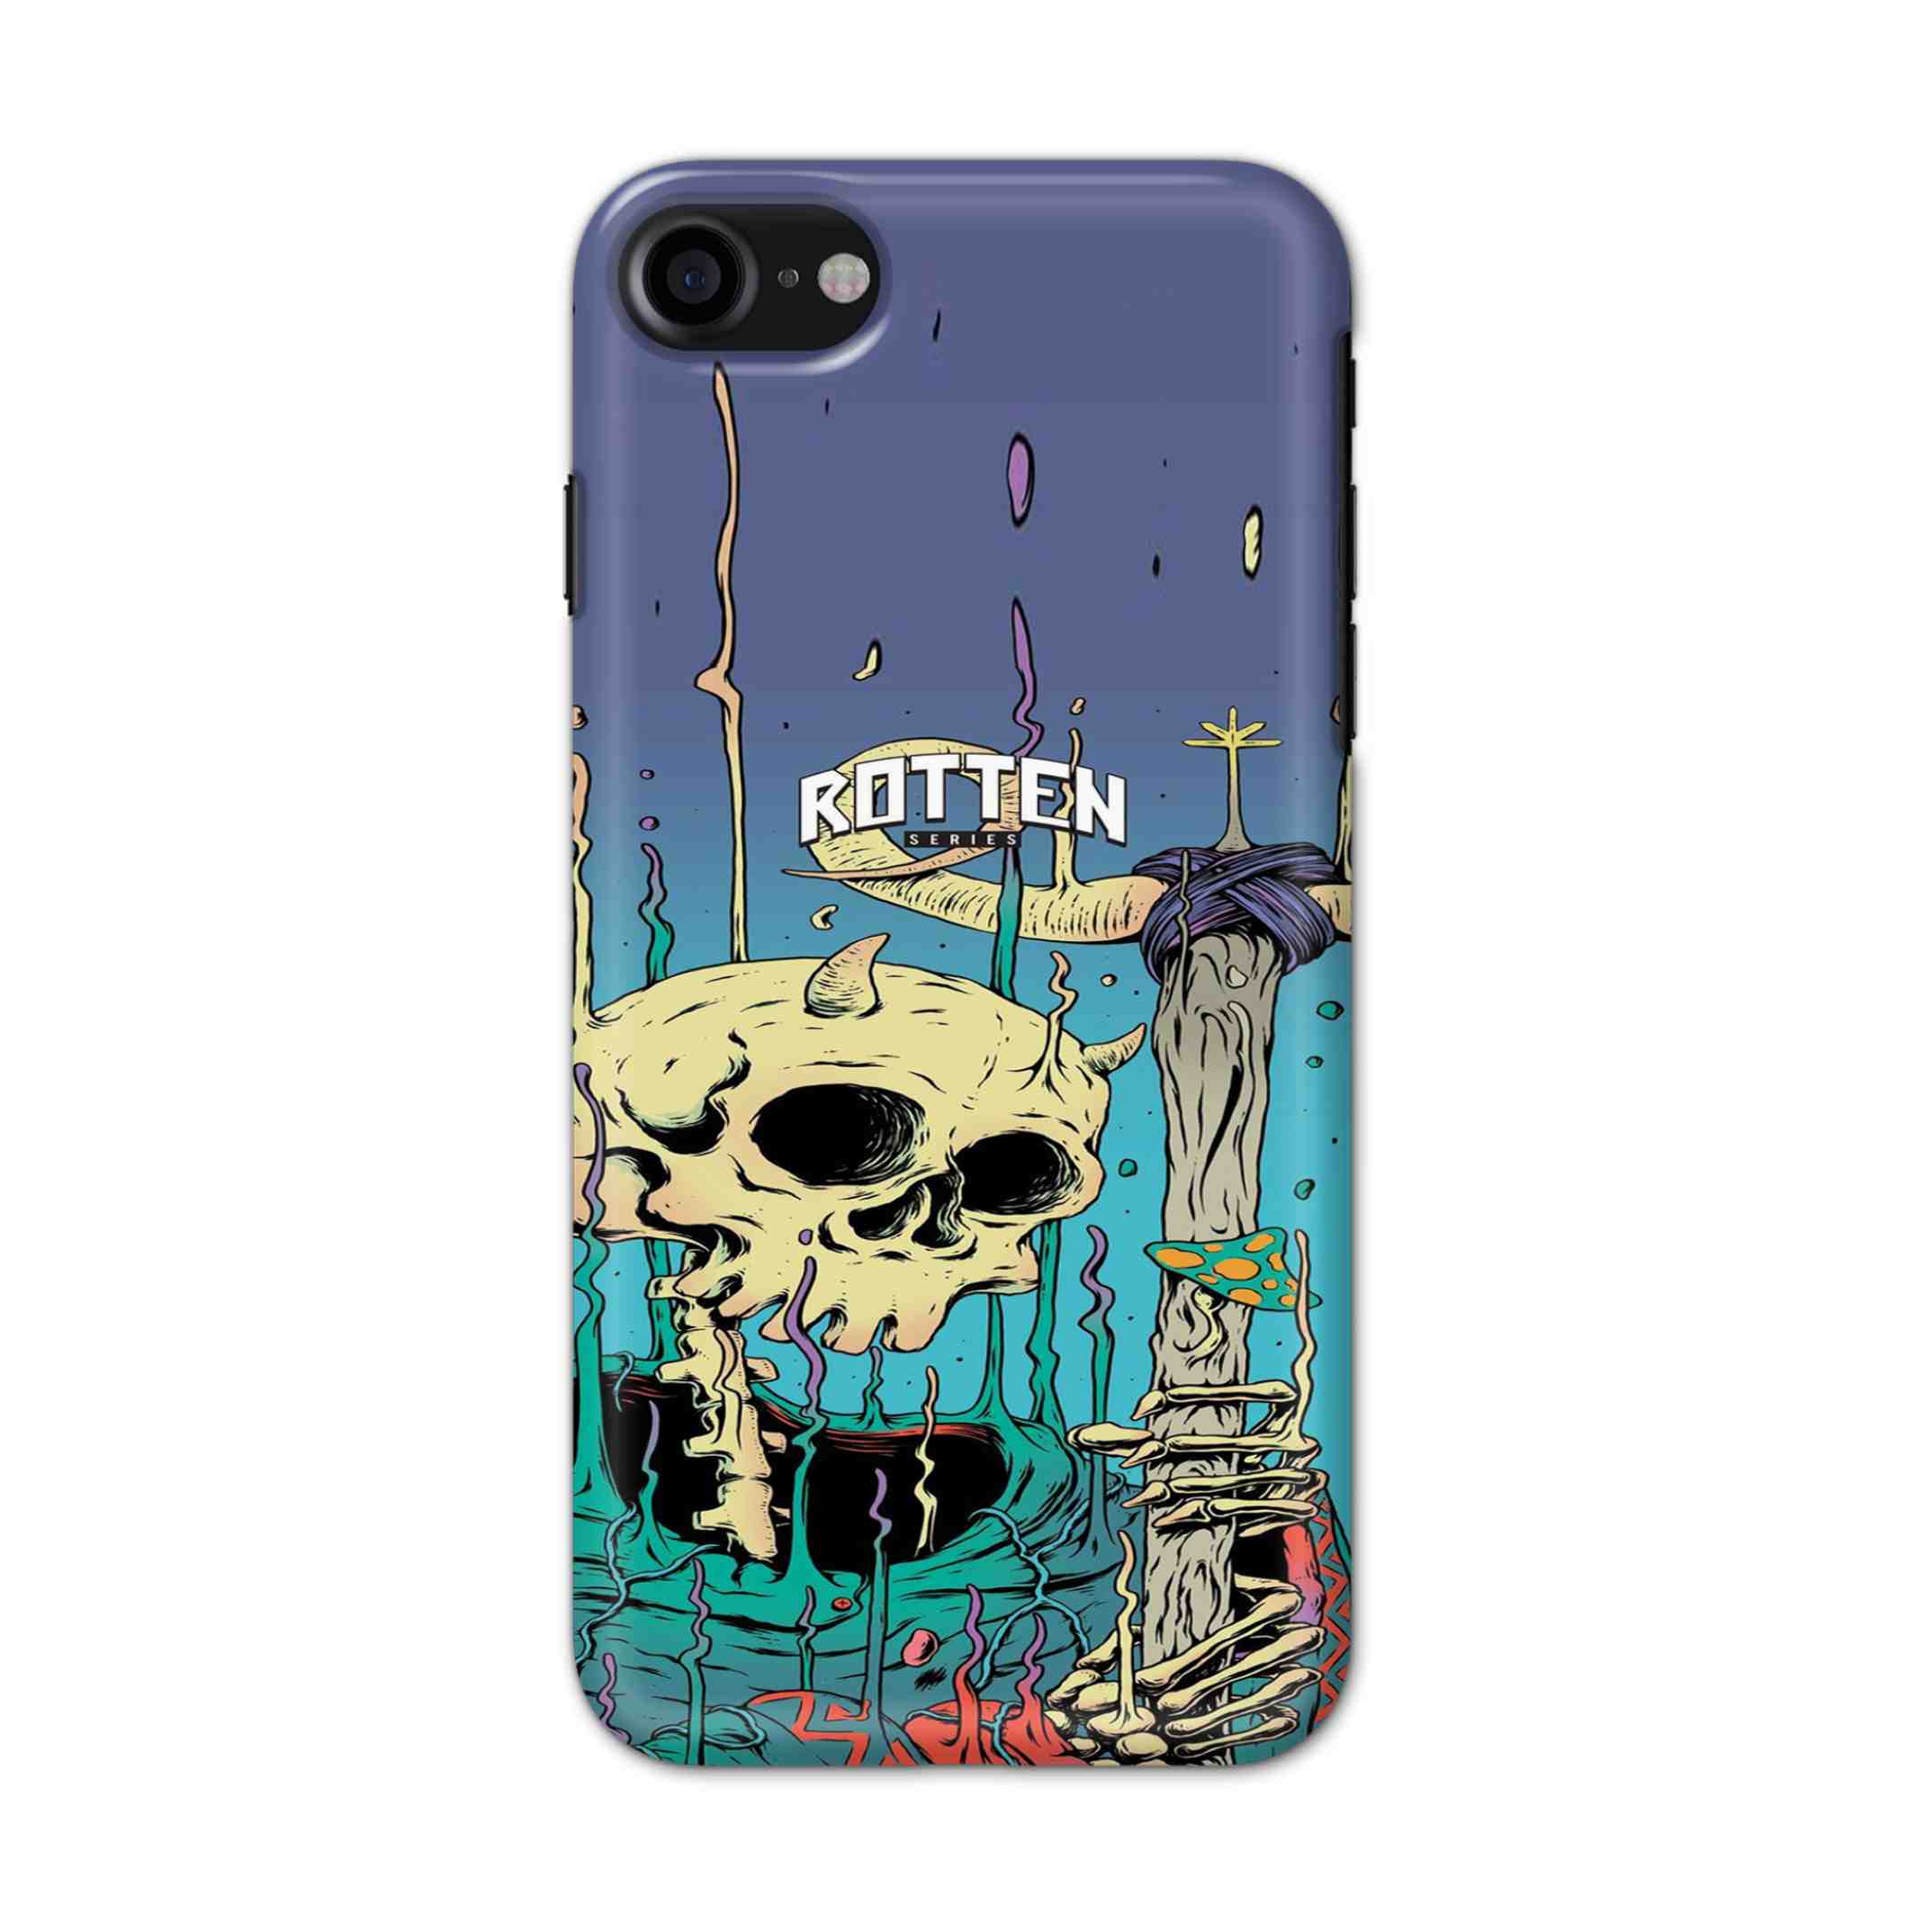 Buy Skull Hard Back Mobile Phone Case/Cover For iPhone 7 / 8 Online